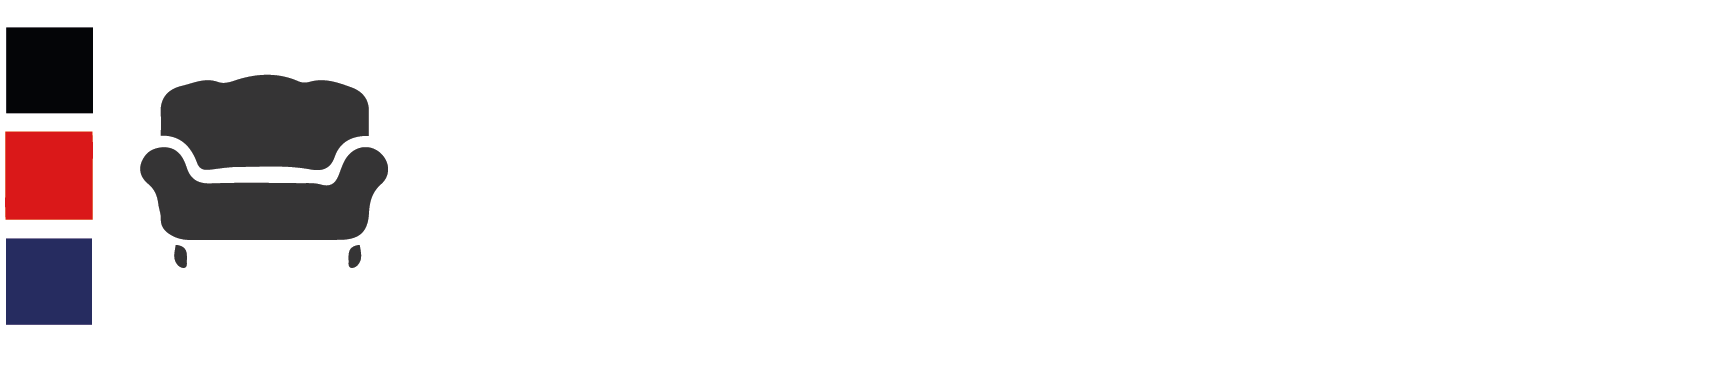 Logo Polsterei Nonnenmacher